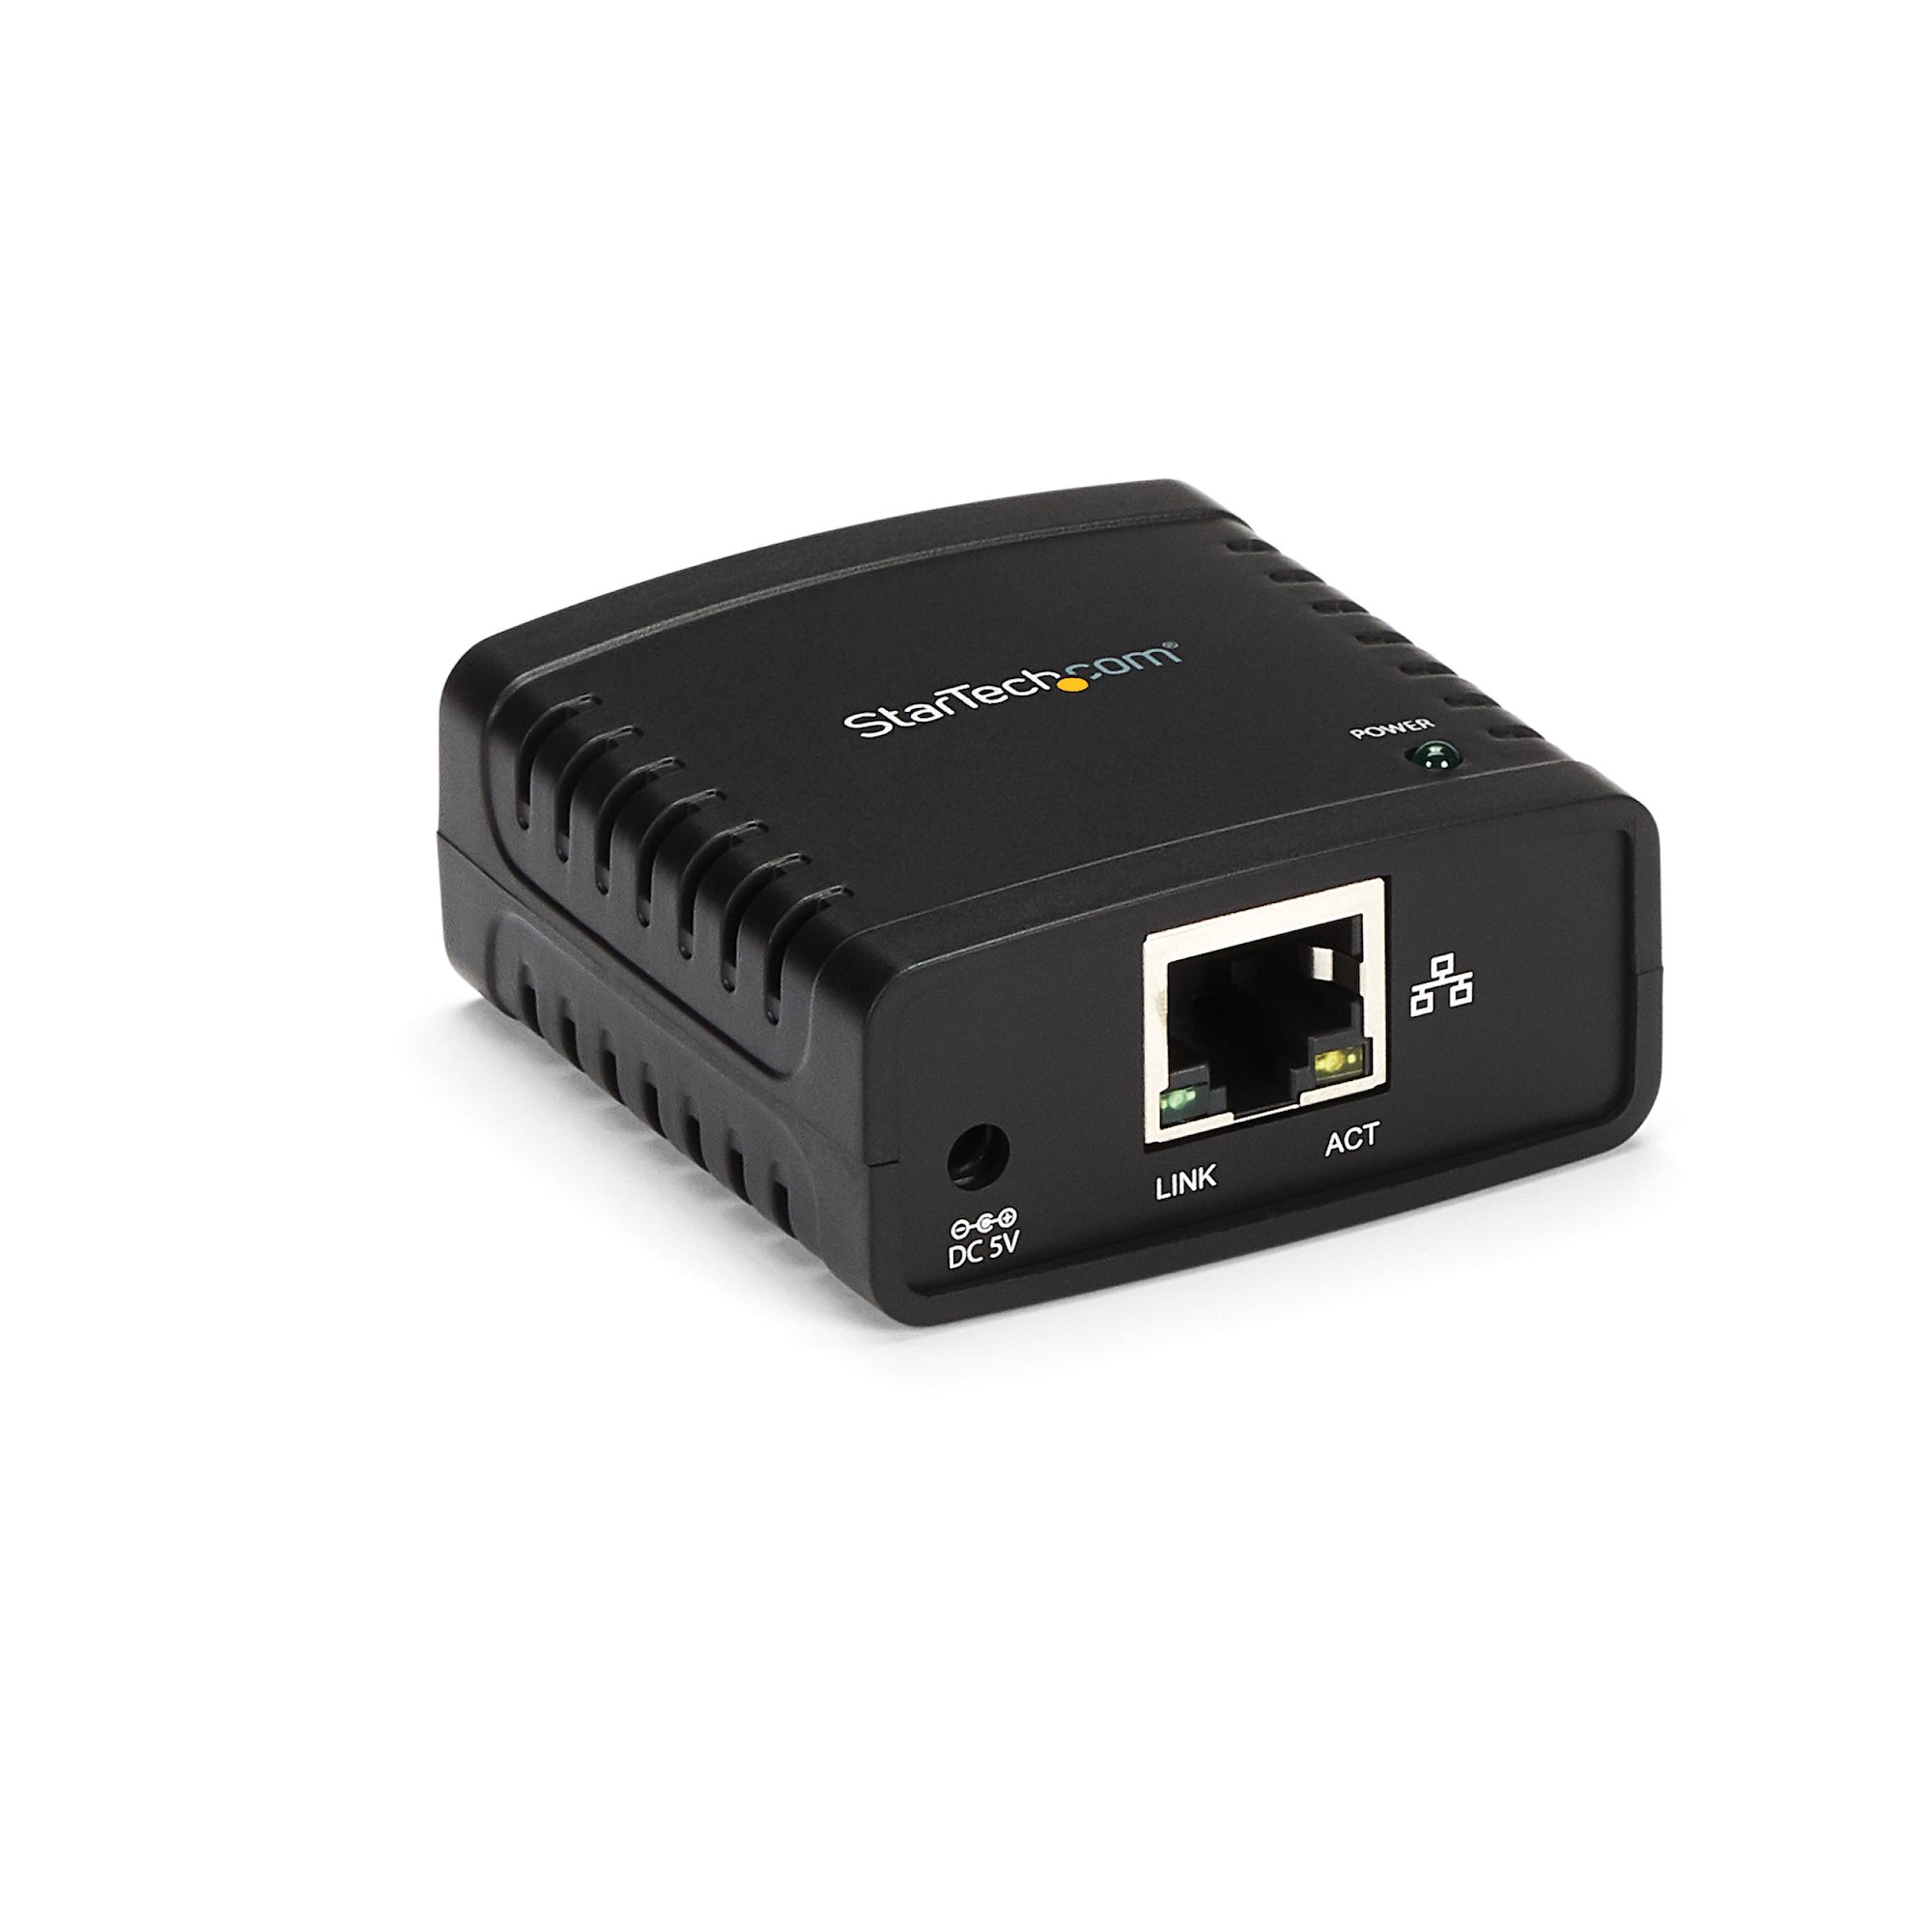 Servidor de Impresión en Red Ethernet 10/100 Mbps a USB 2.0 con LPR - 1 x USB - 1 x Red (RJ-45) - Fast Ethernet - PM1115U2